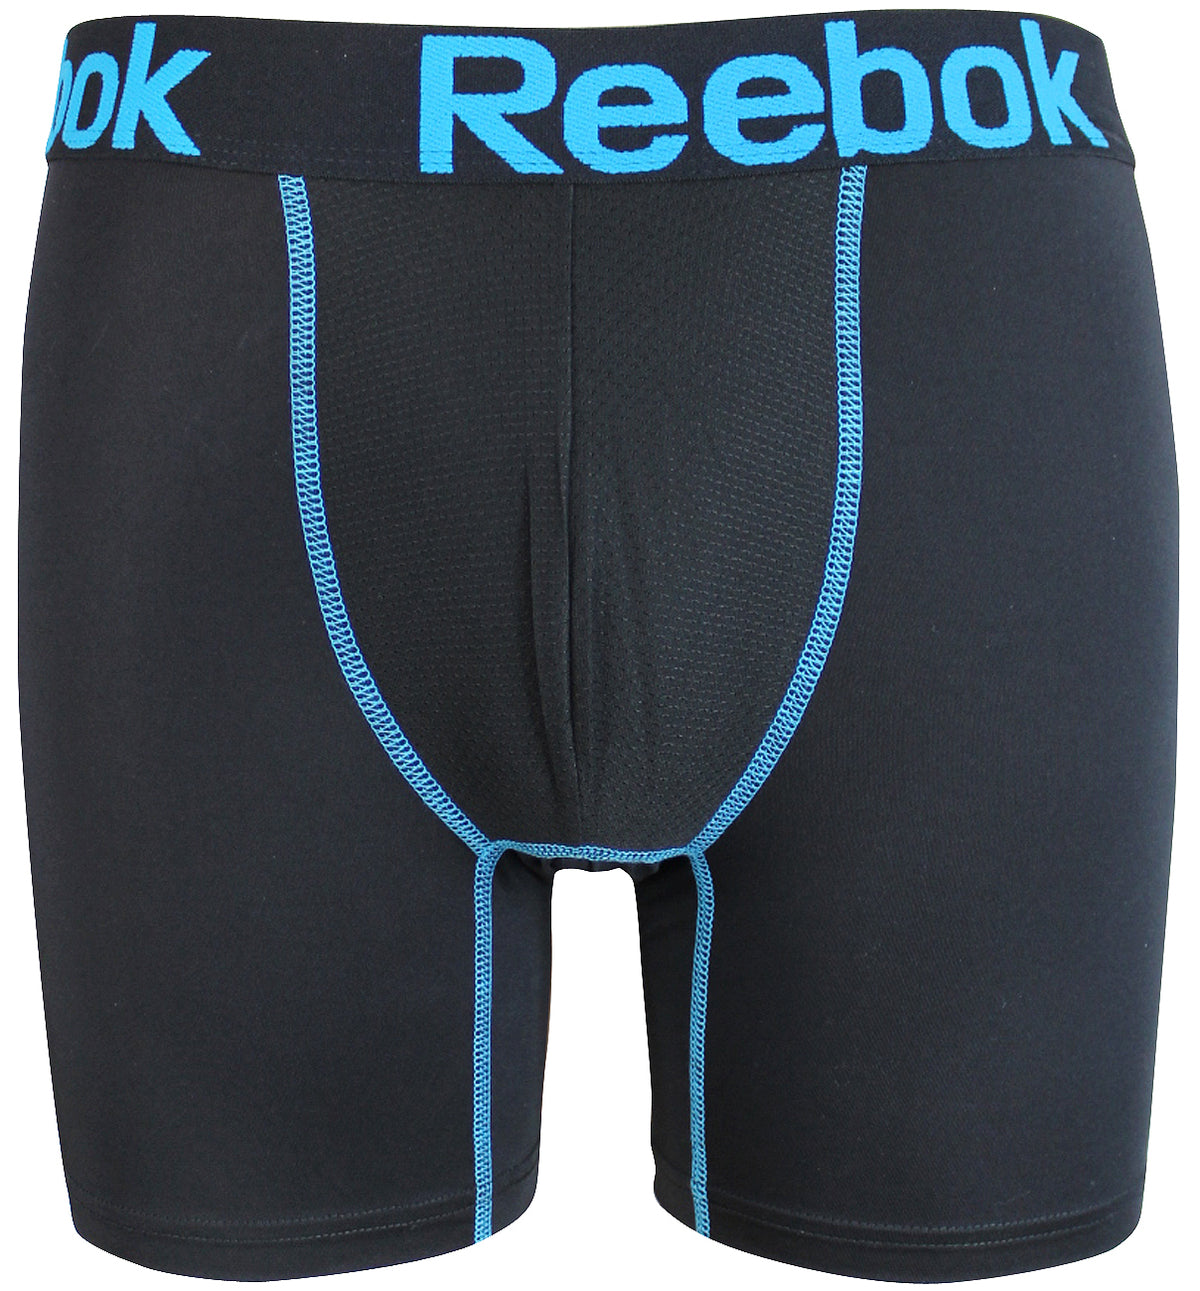 Reebok Mens Performance Training Boxer Briefs Black Wild Blue size SMALL